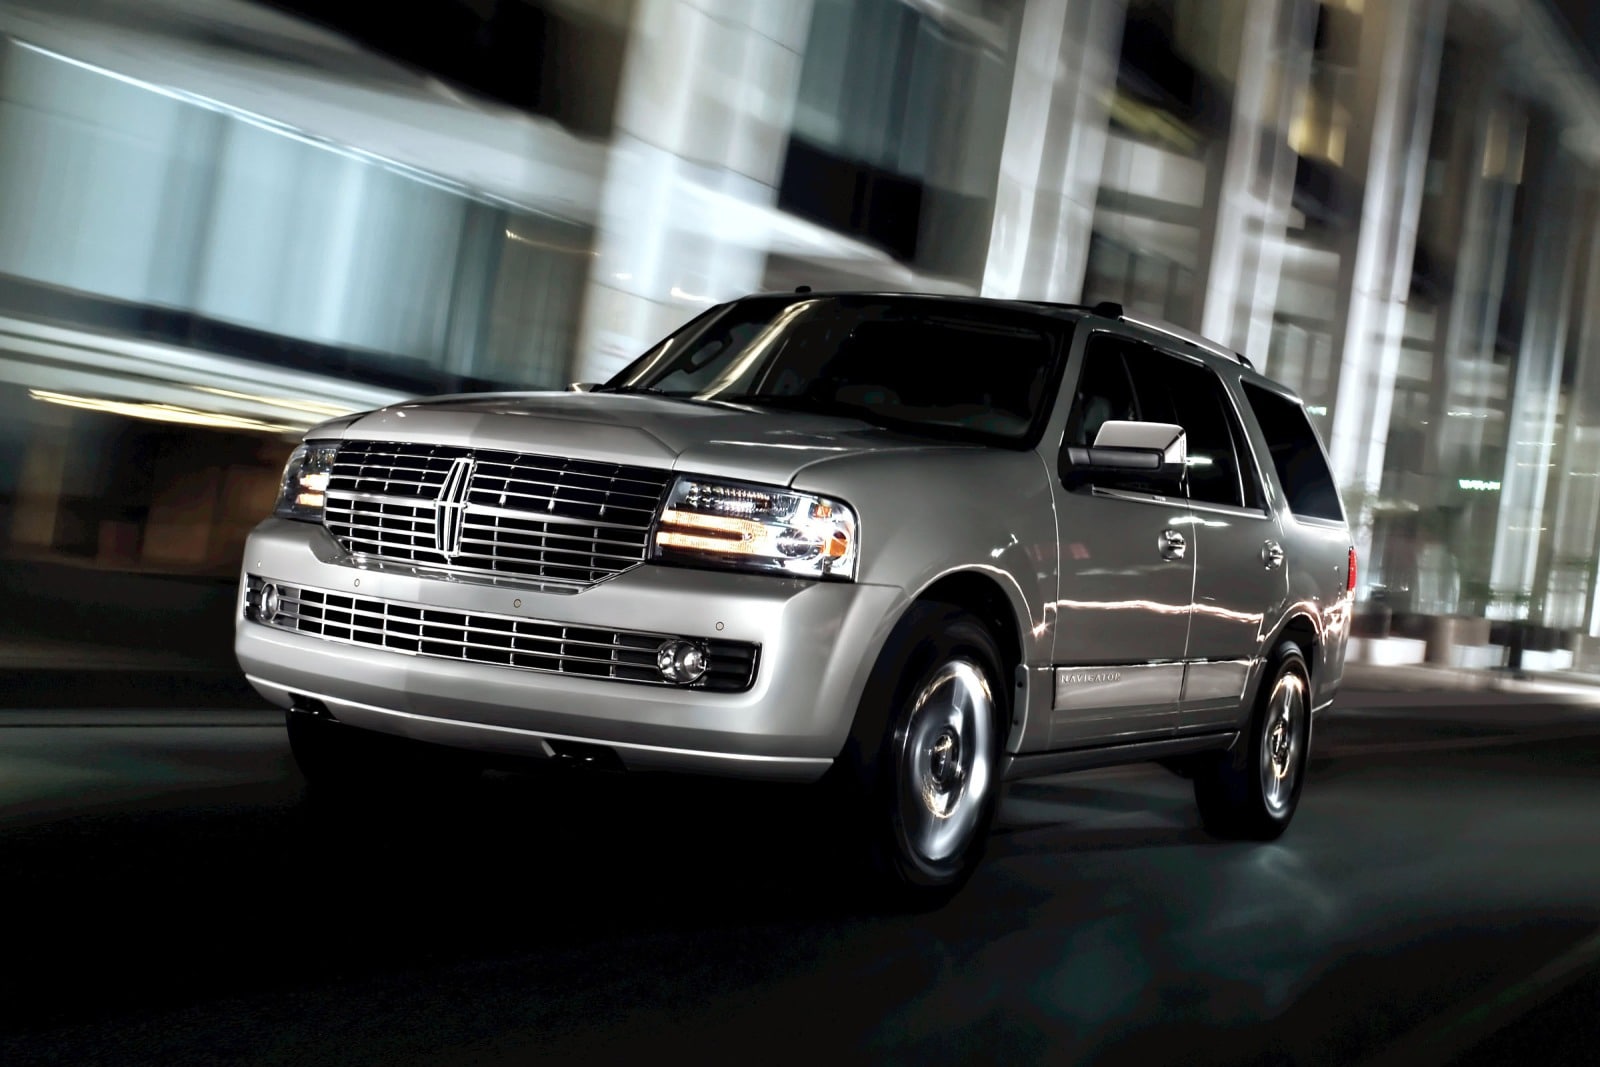 2013 Lincoln Navigator Review & Ratings | Edmunds